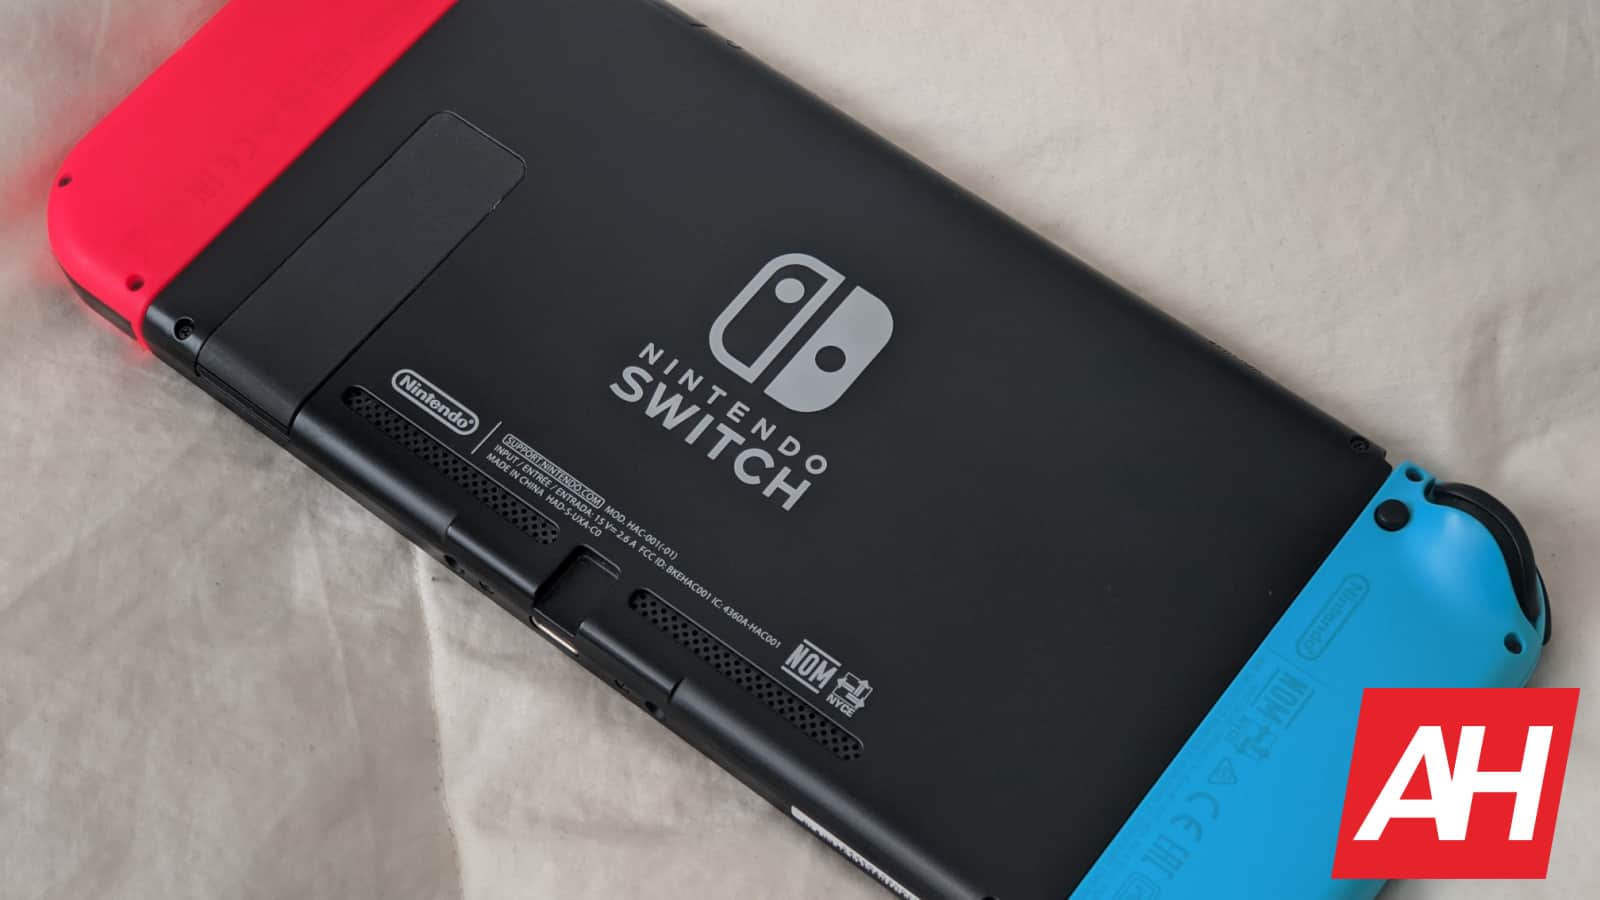 Nintendo switch sd